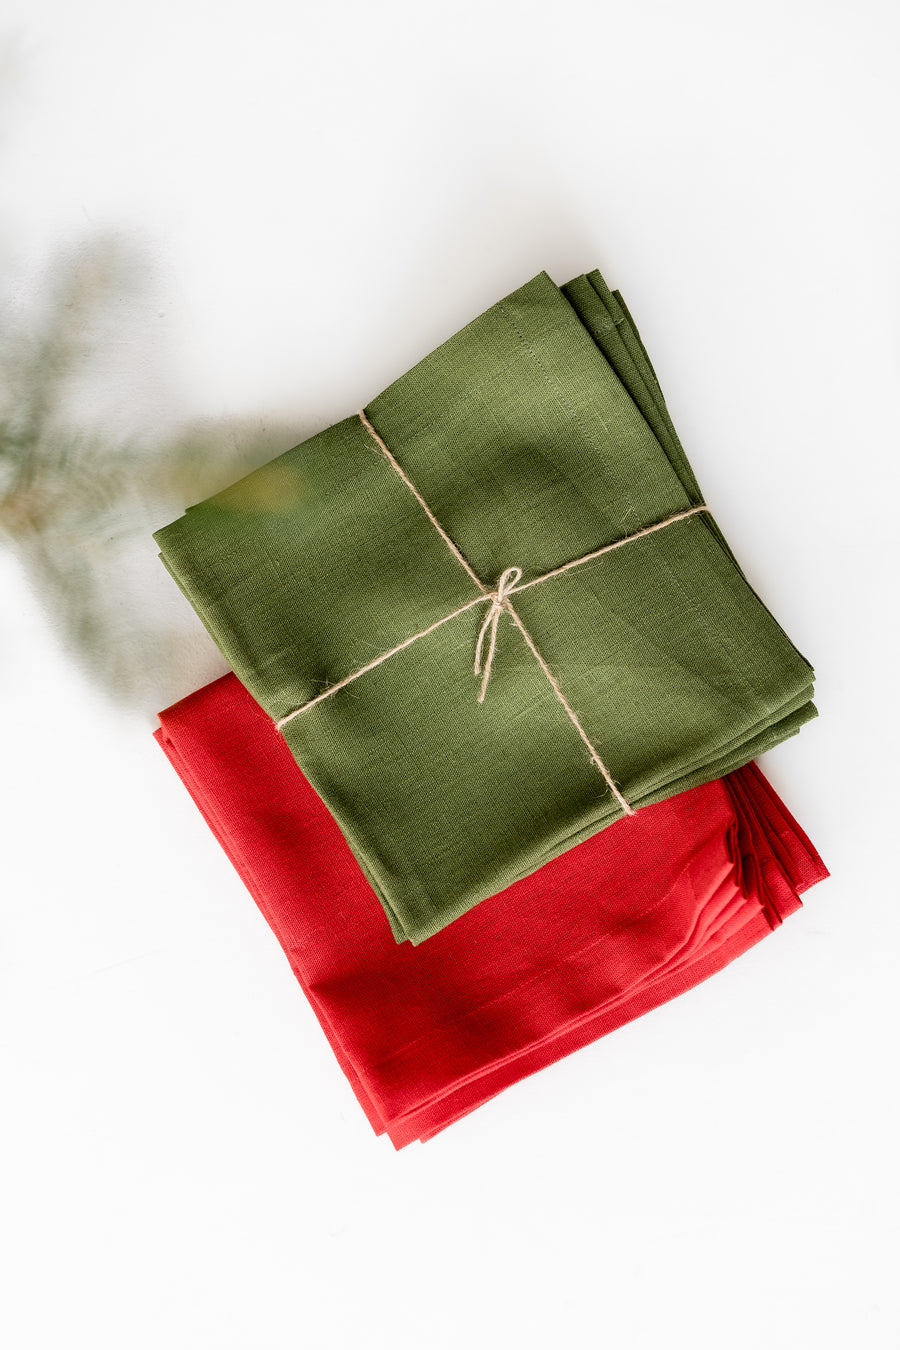 Christmas Napkins set of 4 pcs Linen Napkins Red / Green Custom order napkins Cloth napkins set Table linens Christmas Gift gift for her